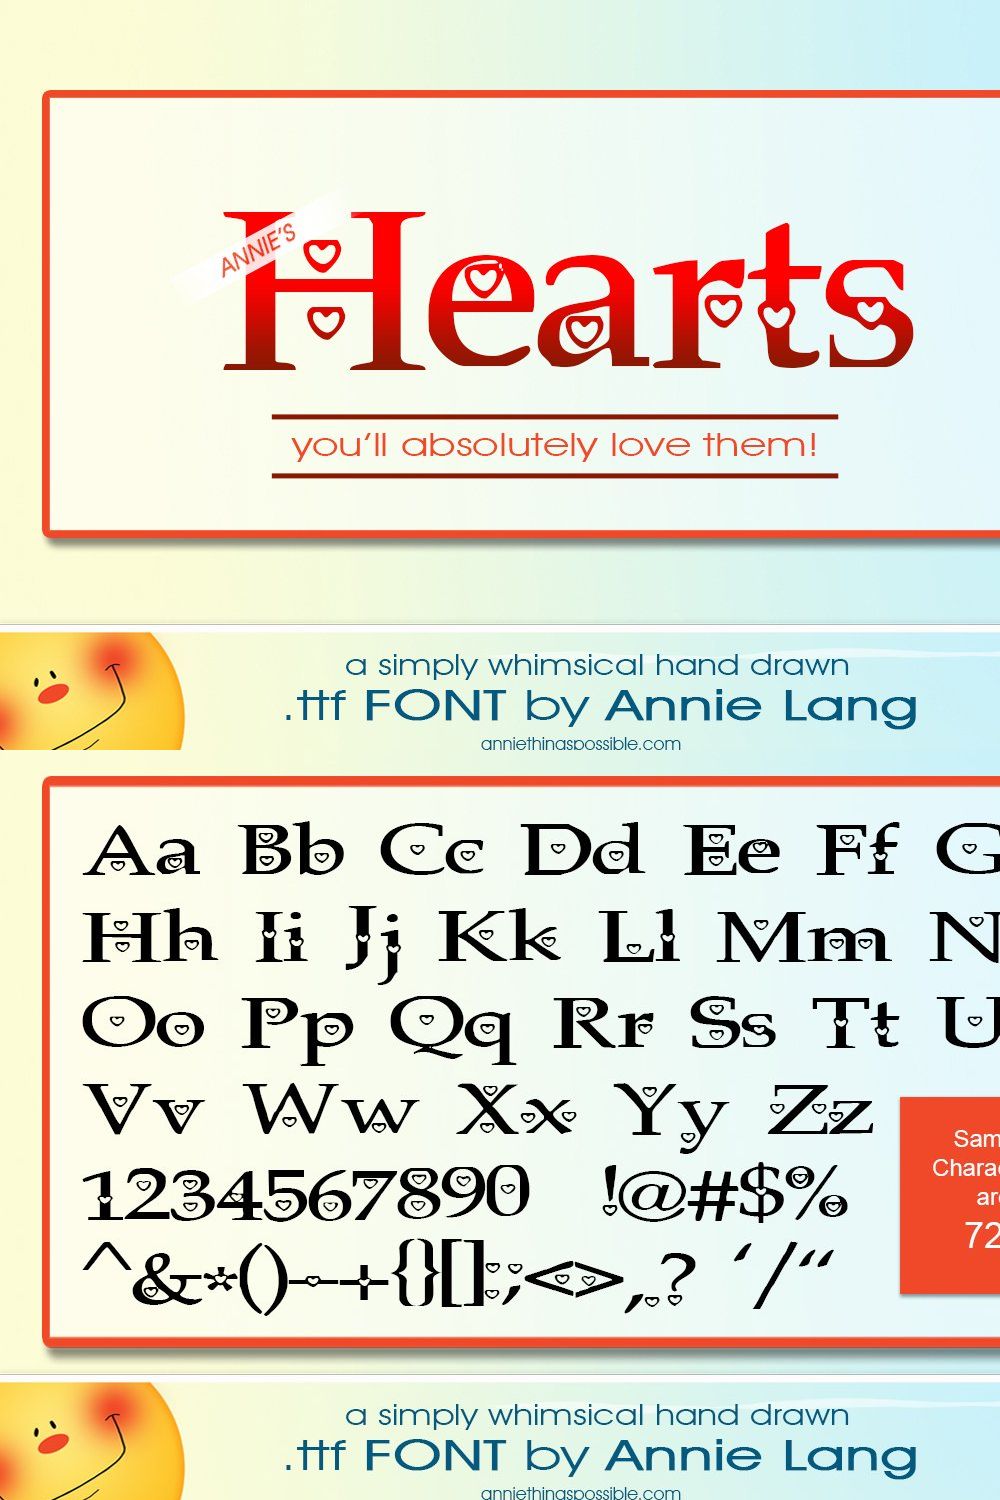 Annie's Hearts Font pinterest preview image.